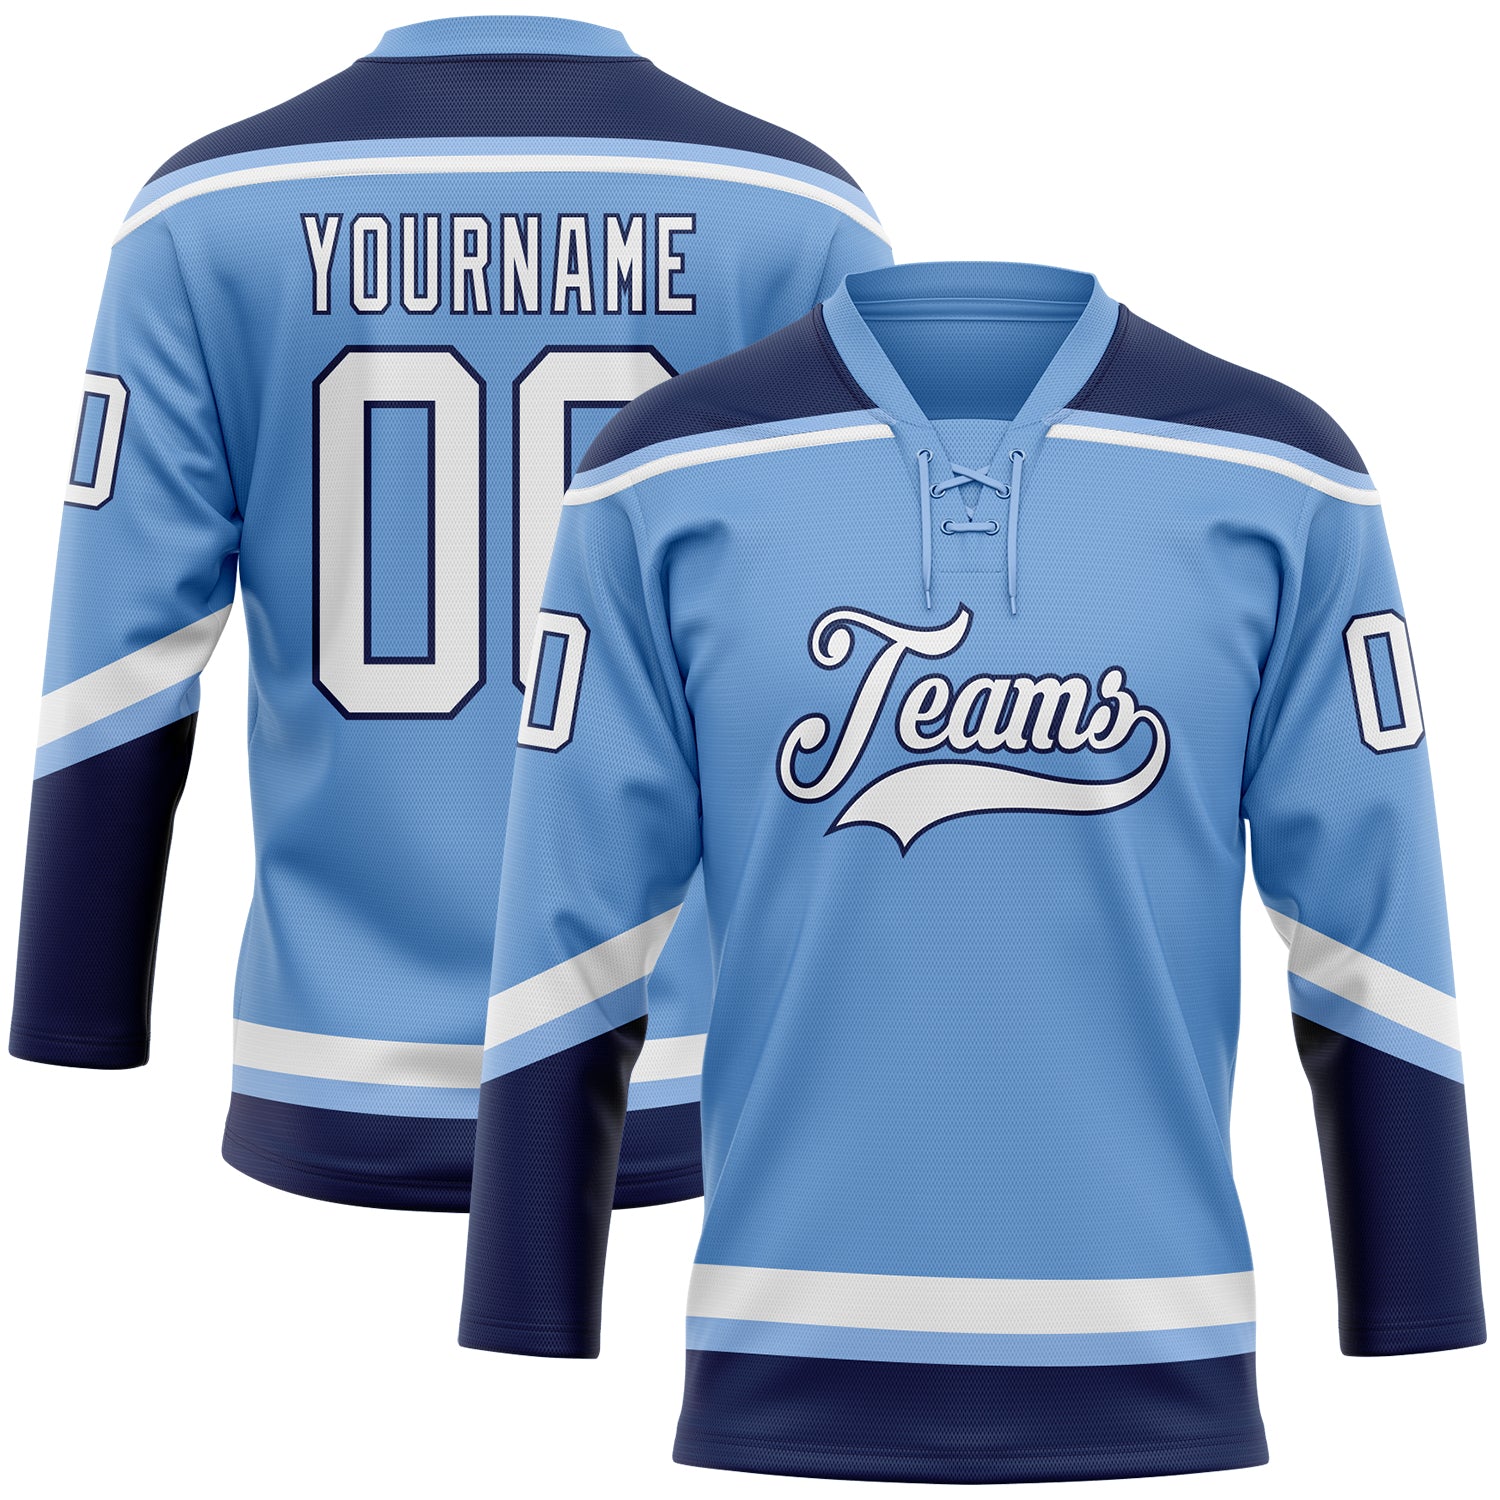 Custom Hockey Uniforms, Adidas, Team Packages